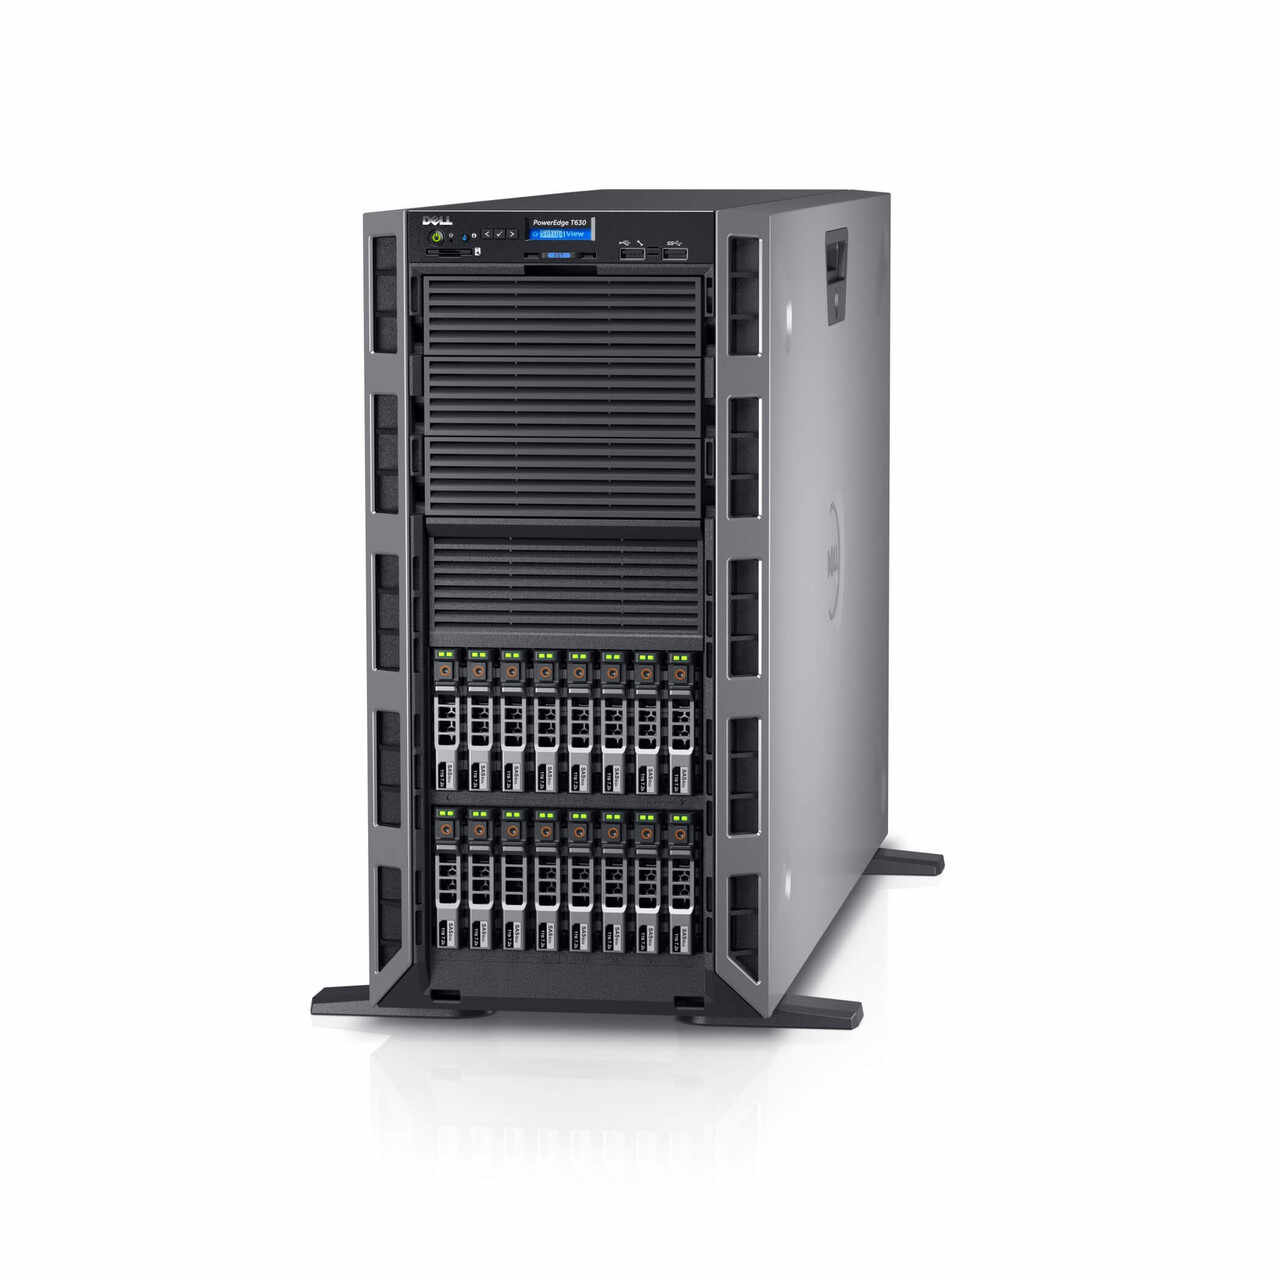 Server Refurbished Dell PowerEdge T630 Tower, 1 x Intel Octa Core Xeon E5-2630 V3 2.40 - 3.20GHz, 32GB DDR4 ECC REG, 2 x 900GB HDD SAS/10k, RAID PERC H730P/2GB, iDrac8 Enterprise, 2 X PSU 750W